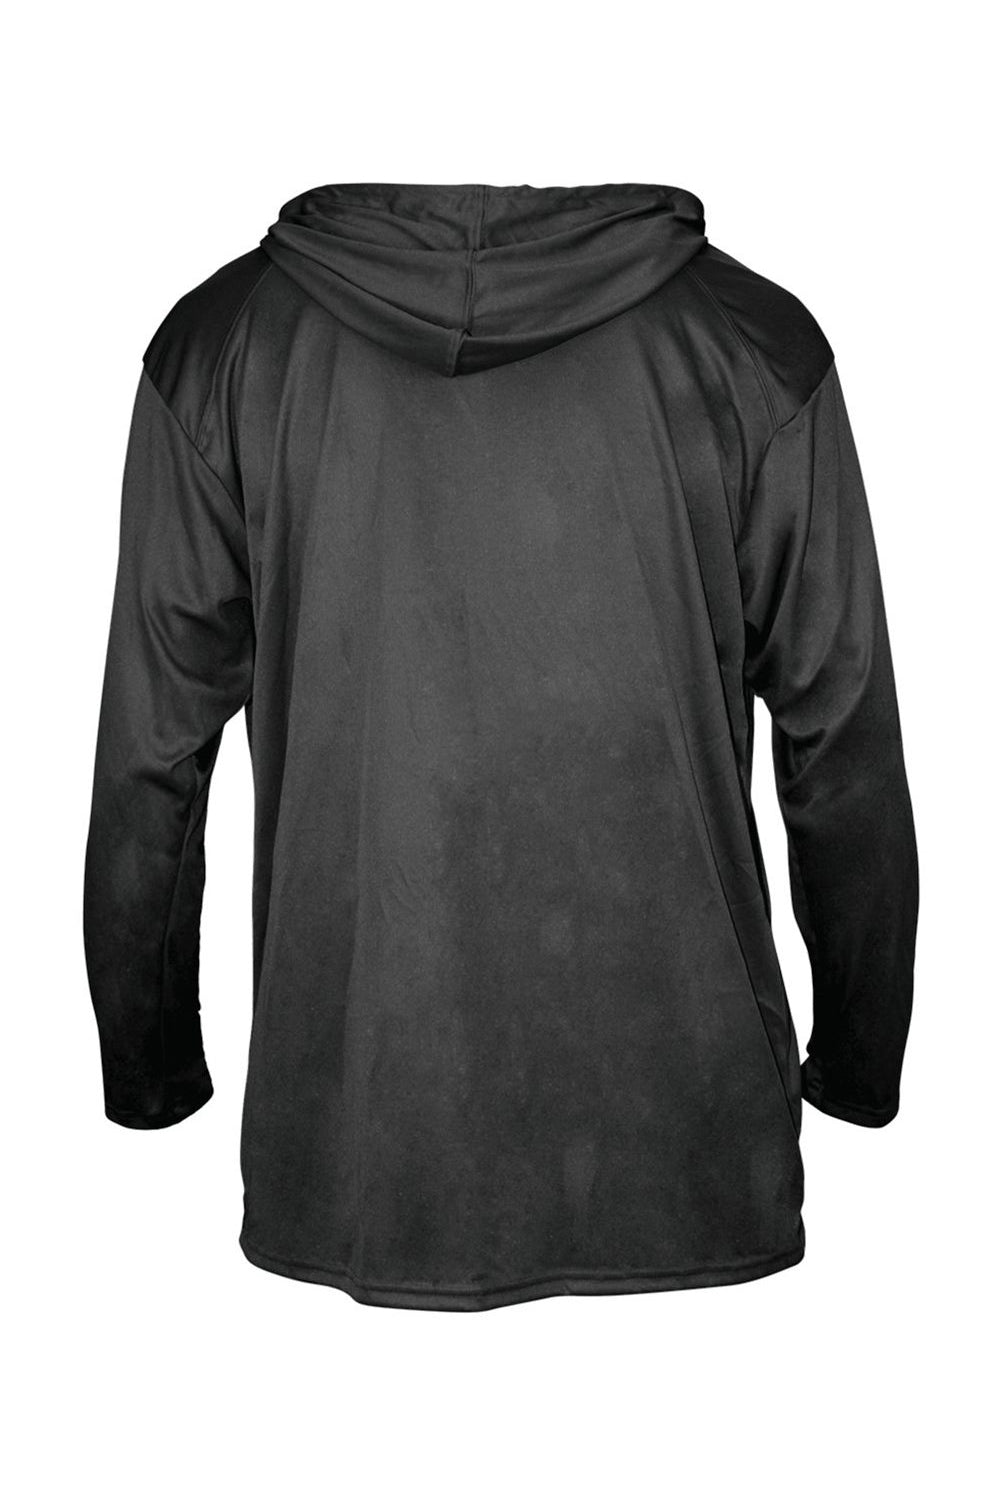 Badger 4105 Mens B-Core Moisture Wicking Long Sleeve Hooded T-Shirt Hoodie Black Flat Back